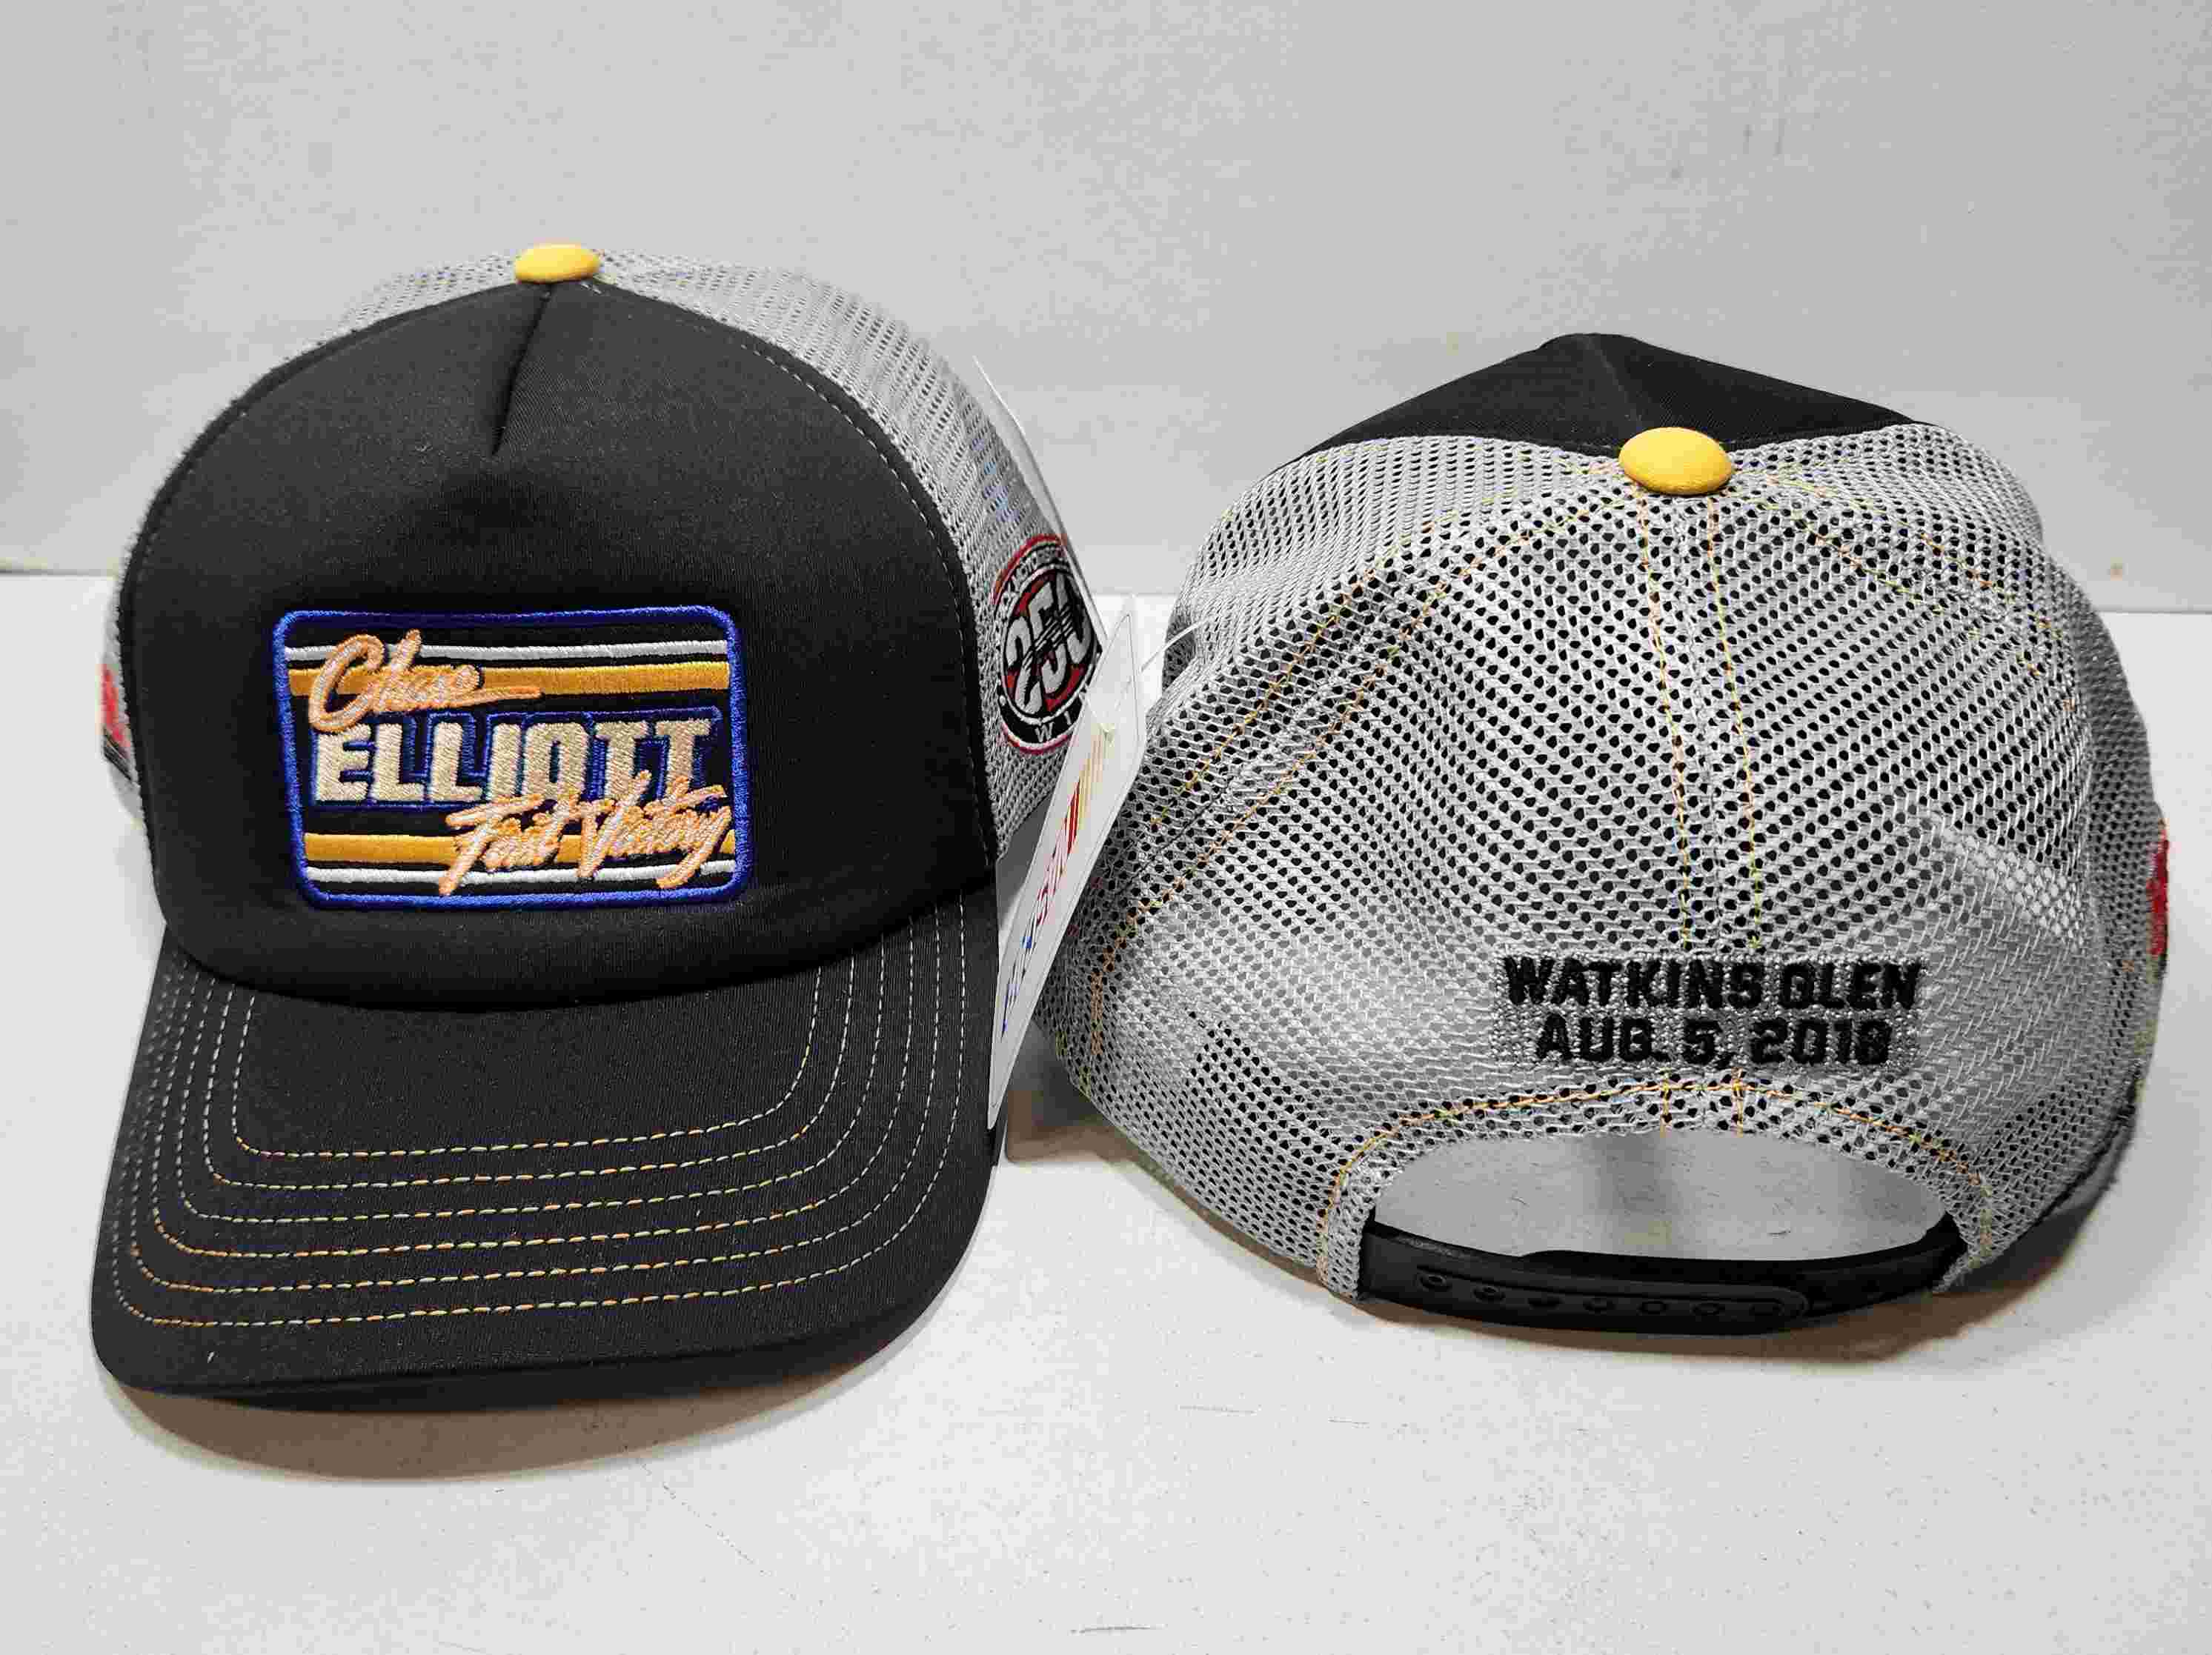 2018 Chase Elliott SunEnergy1BLUE "Watkins Glen Win" mesh cap